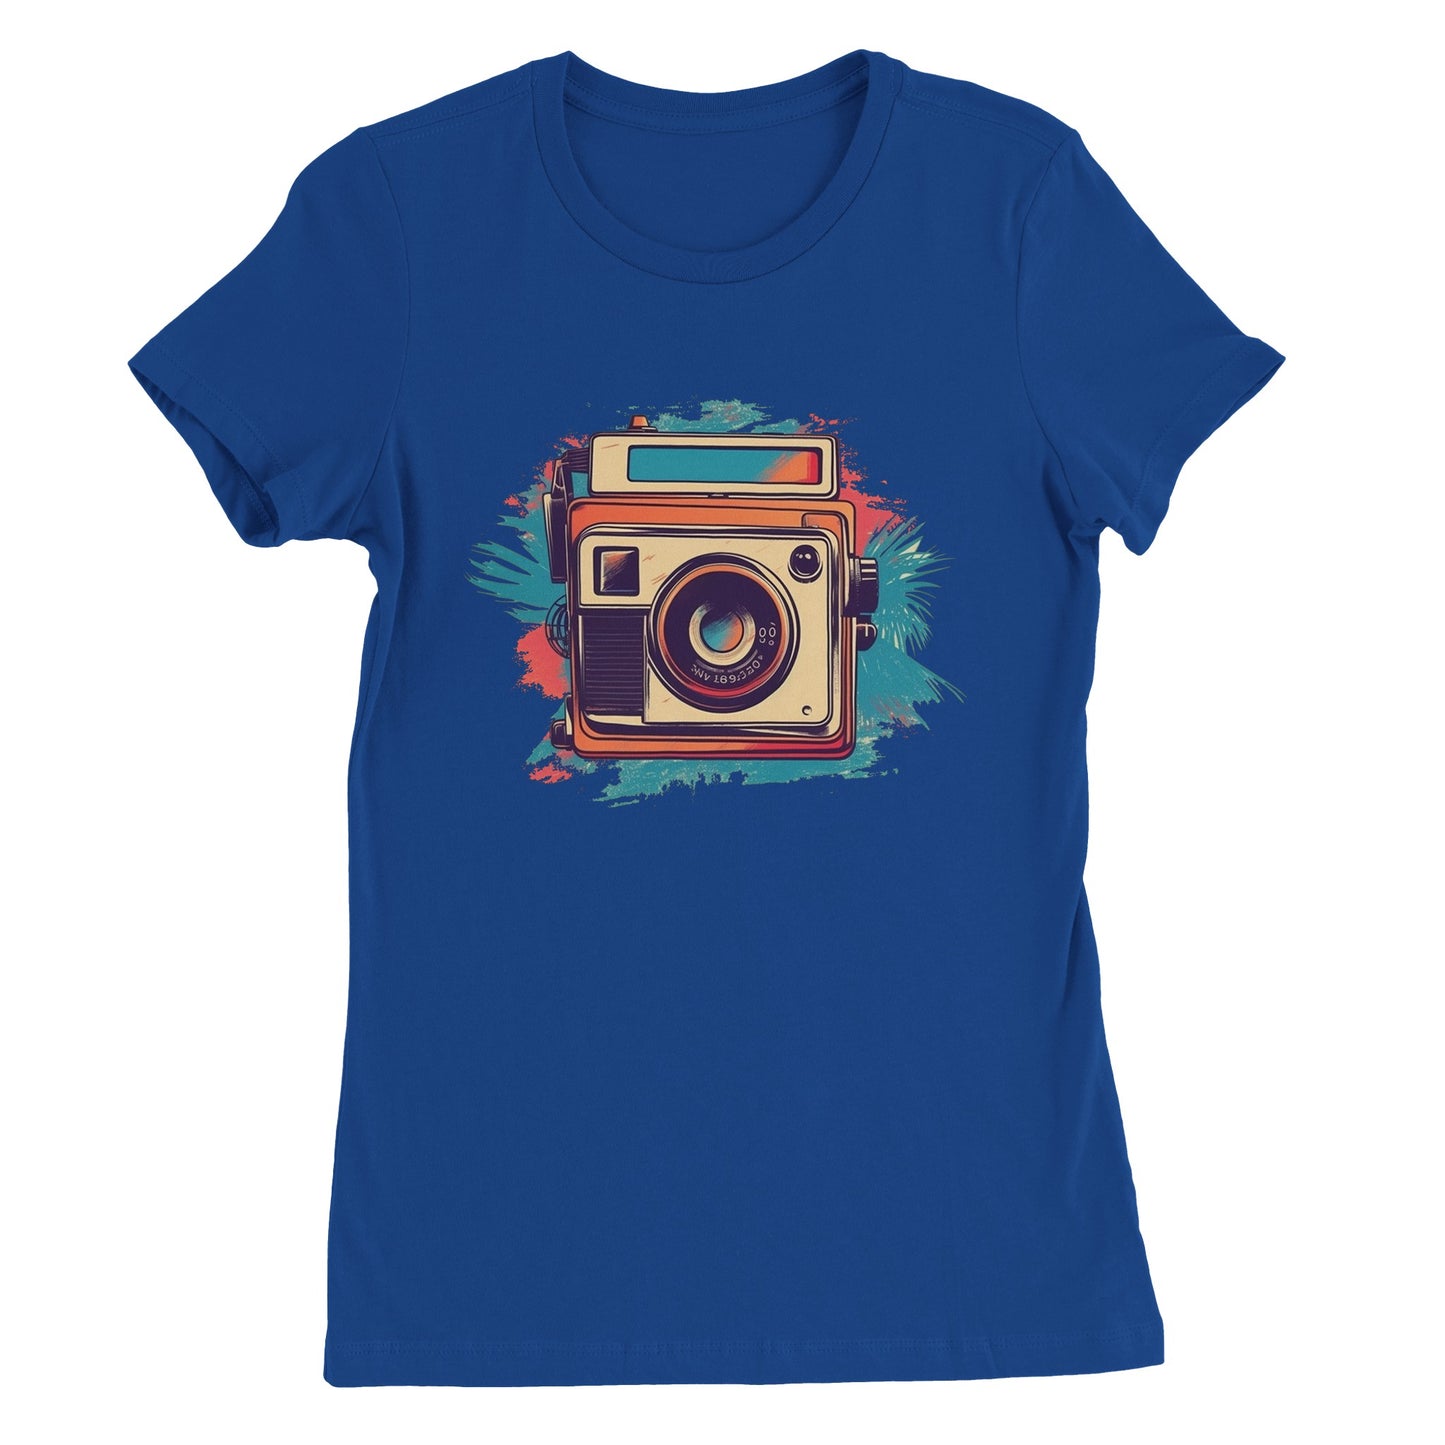 Artwork T-shirt - Polaroid Camera Vintage Artwork Number 1 - Premium Women's T-shirt 